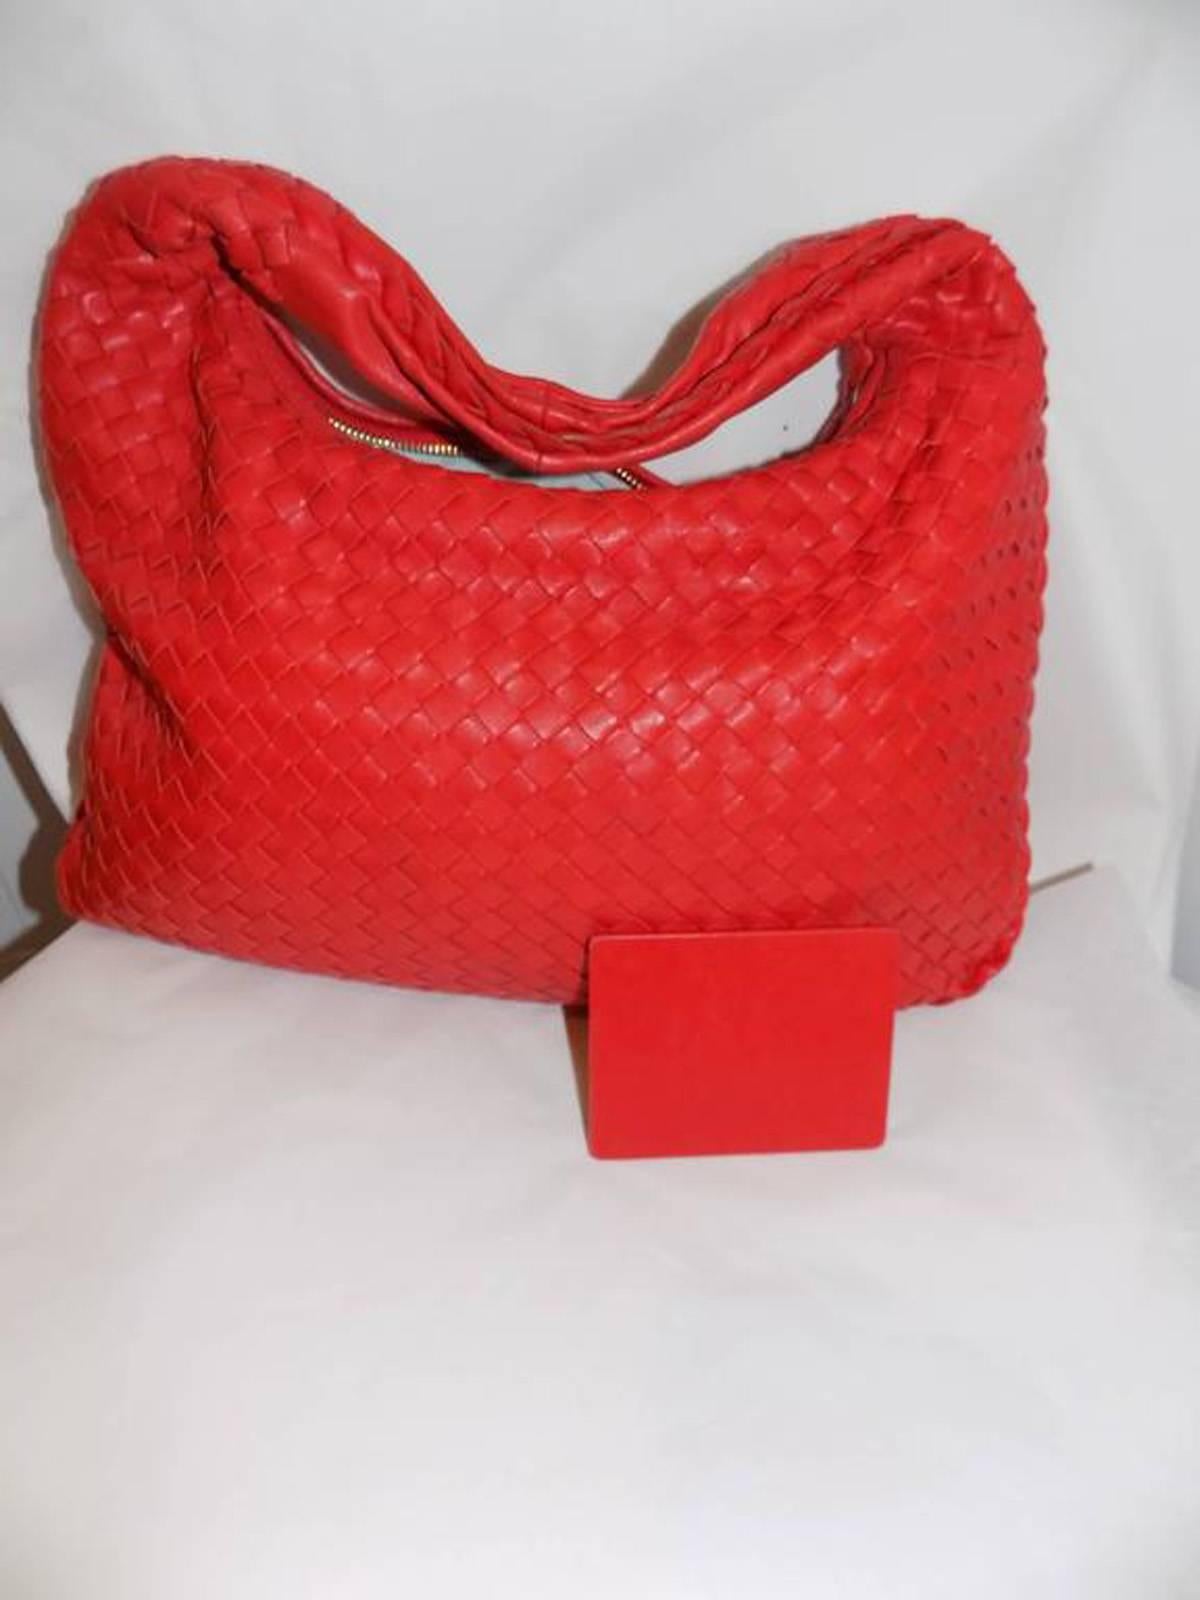 Red Orange  Woven Leather  Intrecciato Bottega Veneta Hobo Shoulder Bag For Sale